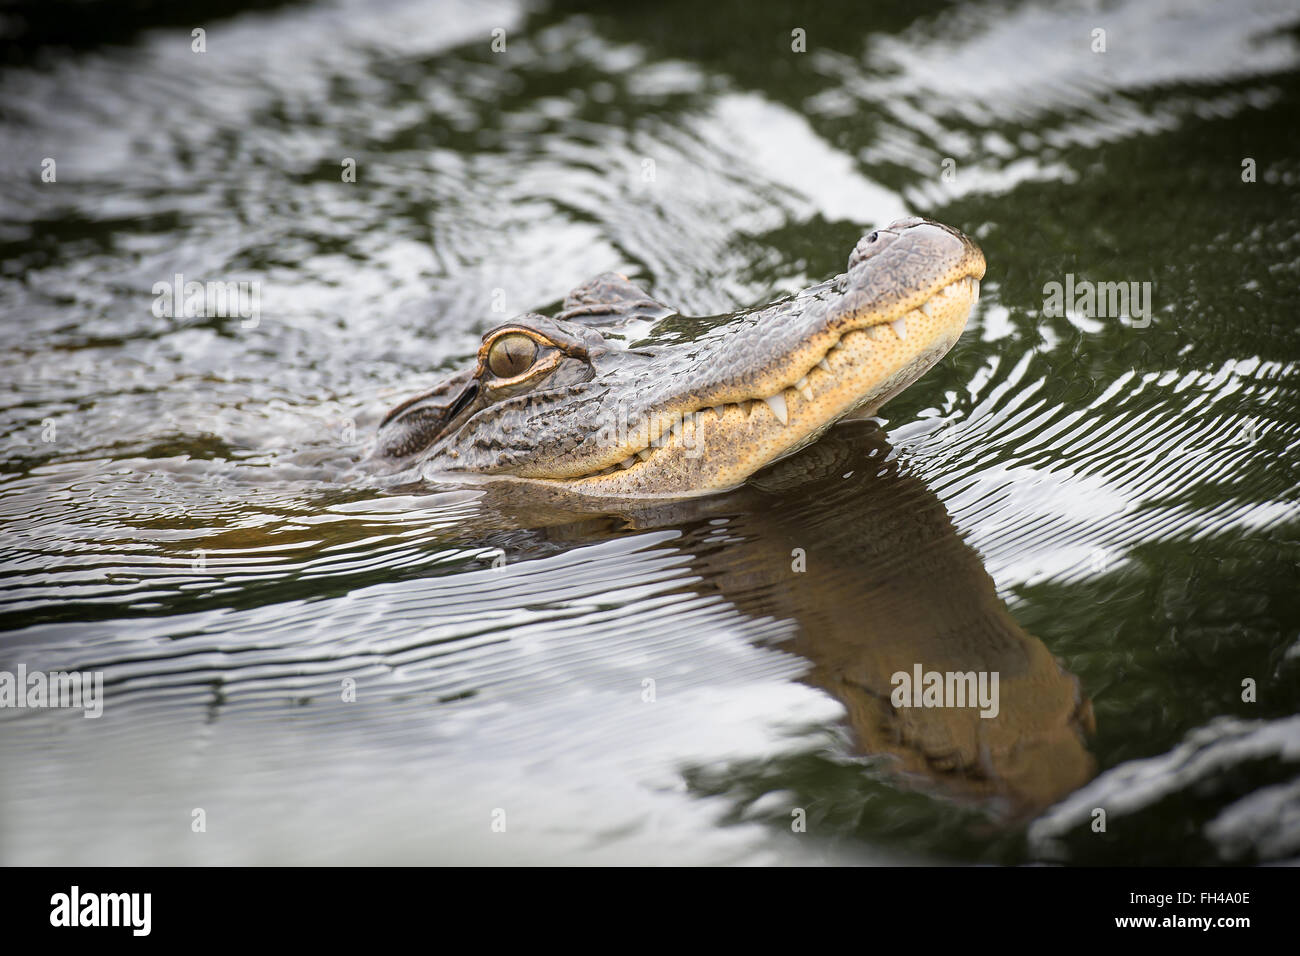 Alligator Kopf Schuss Stockfoto